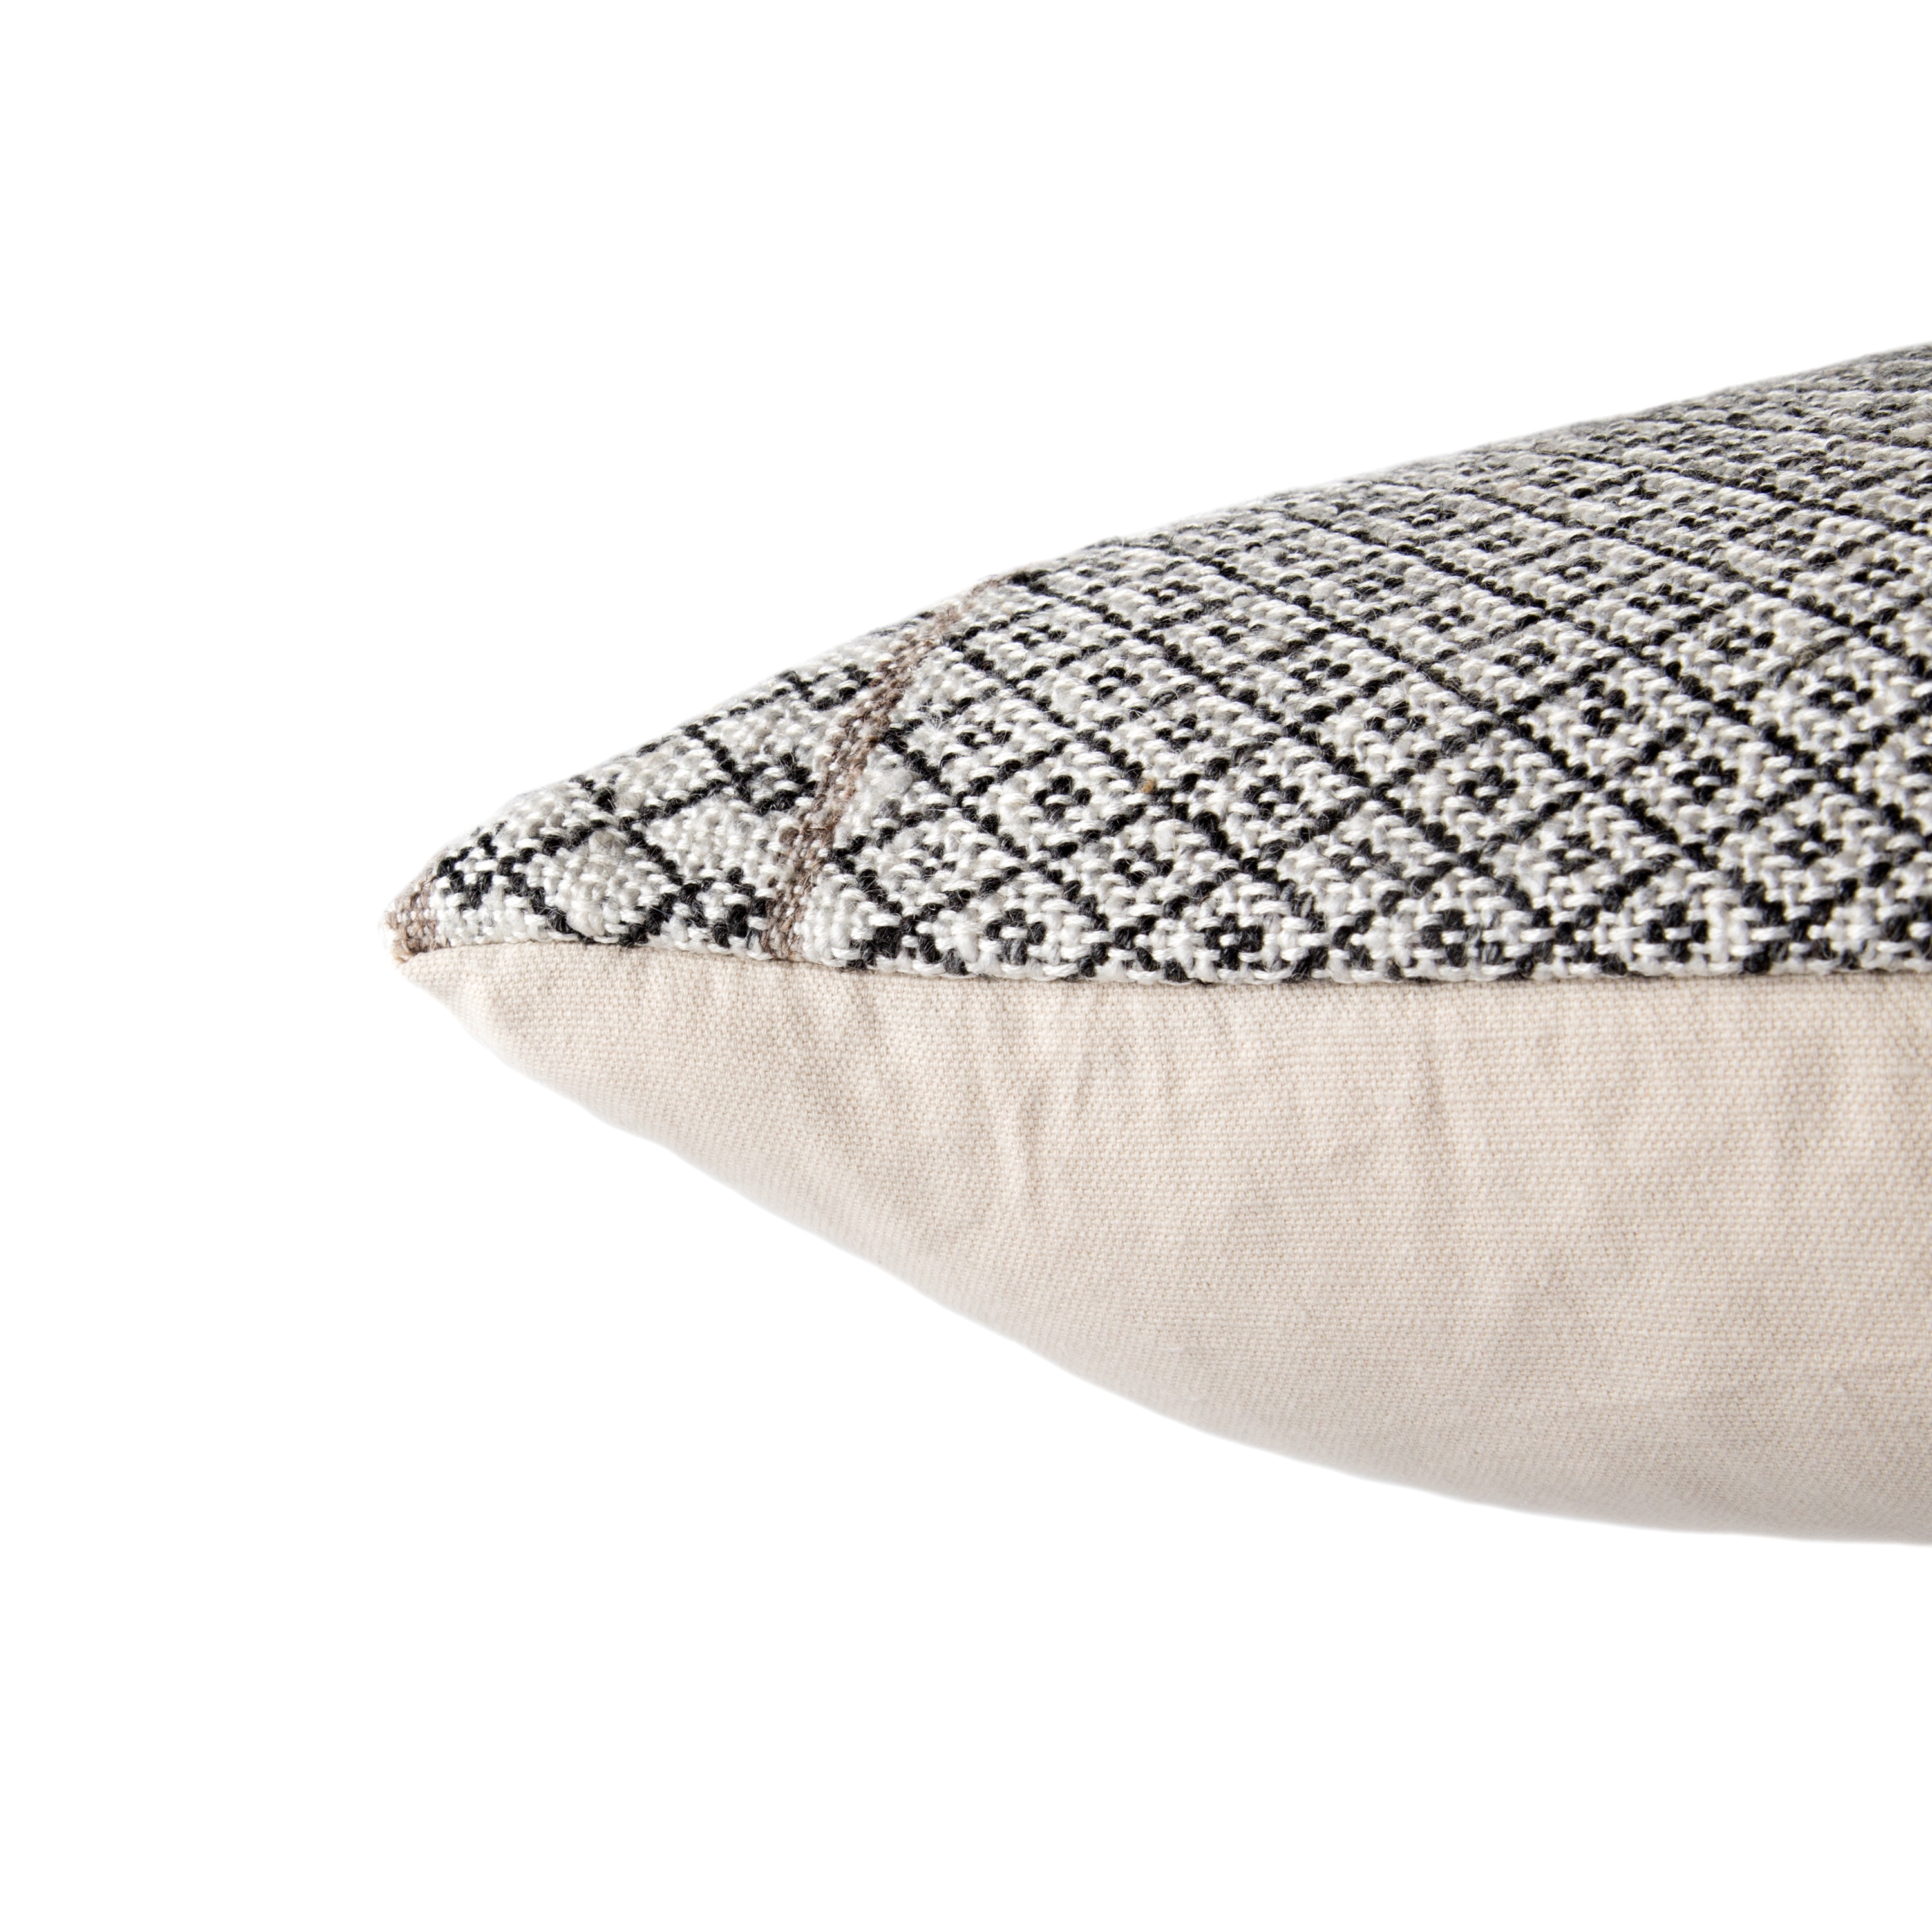 Design (US) Ivory 18"X18" Pillow - Image 2